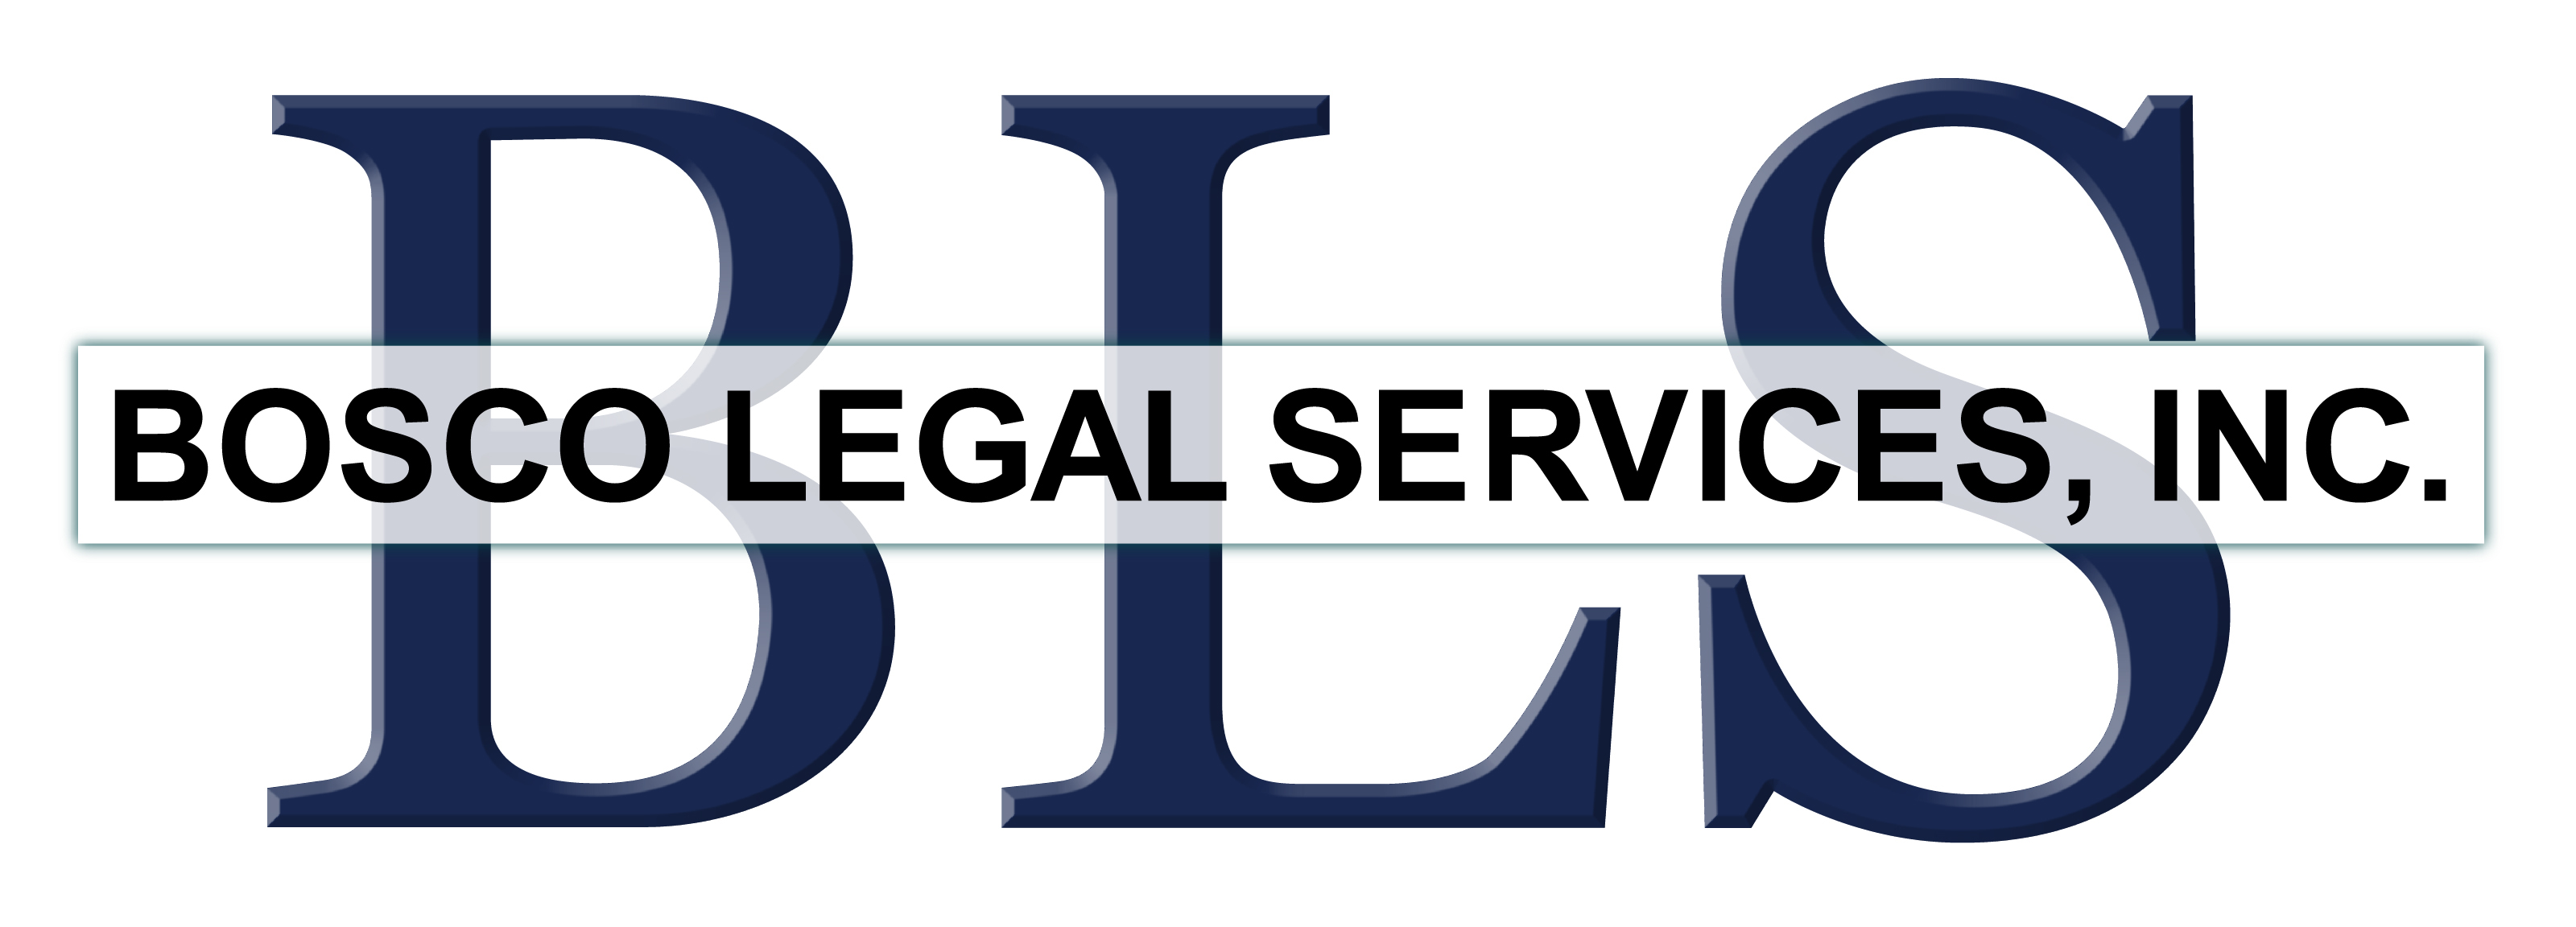 Bosco Legal Services